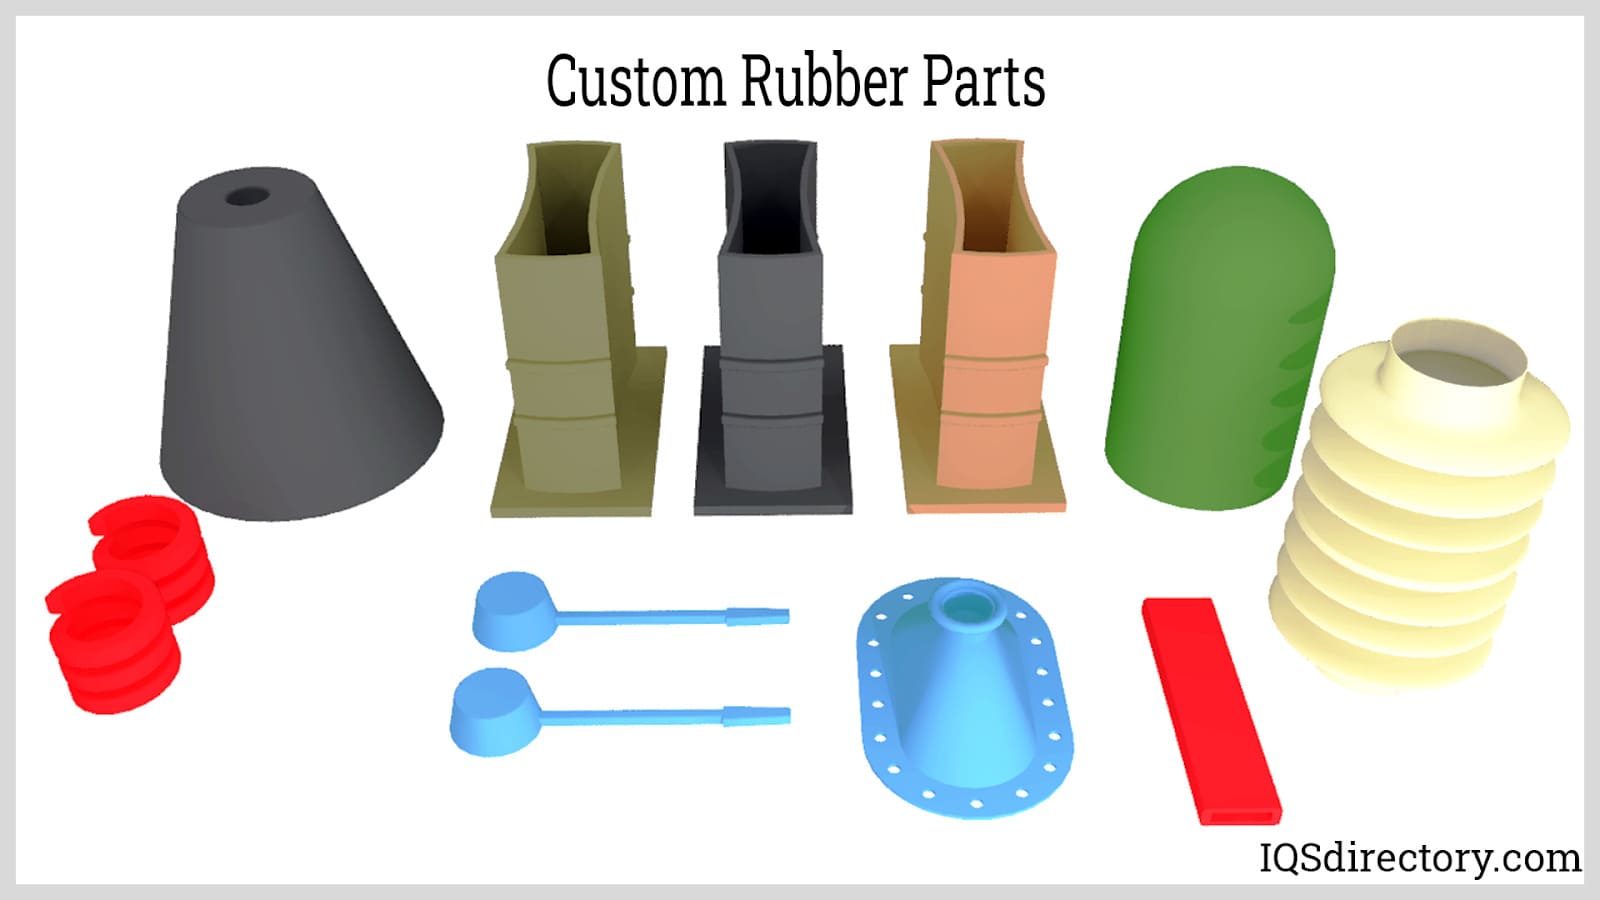 https://www.iqsdirectory.com/articles/rubber/rubber-molding/custom-rubber-parts.jpg